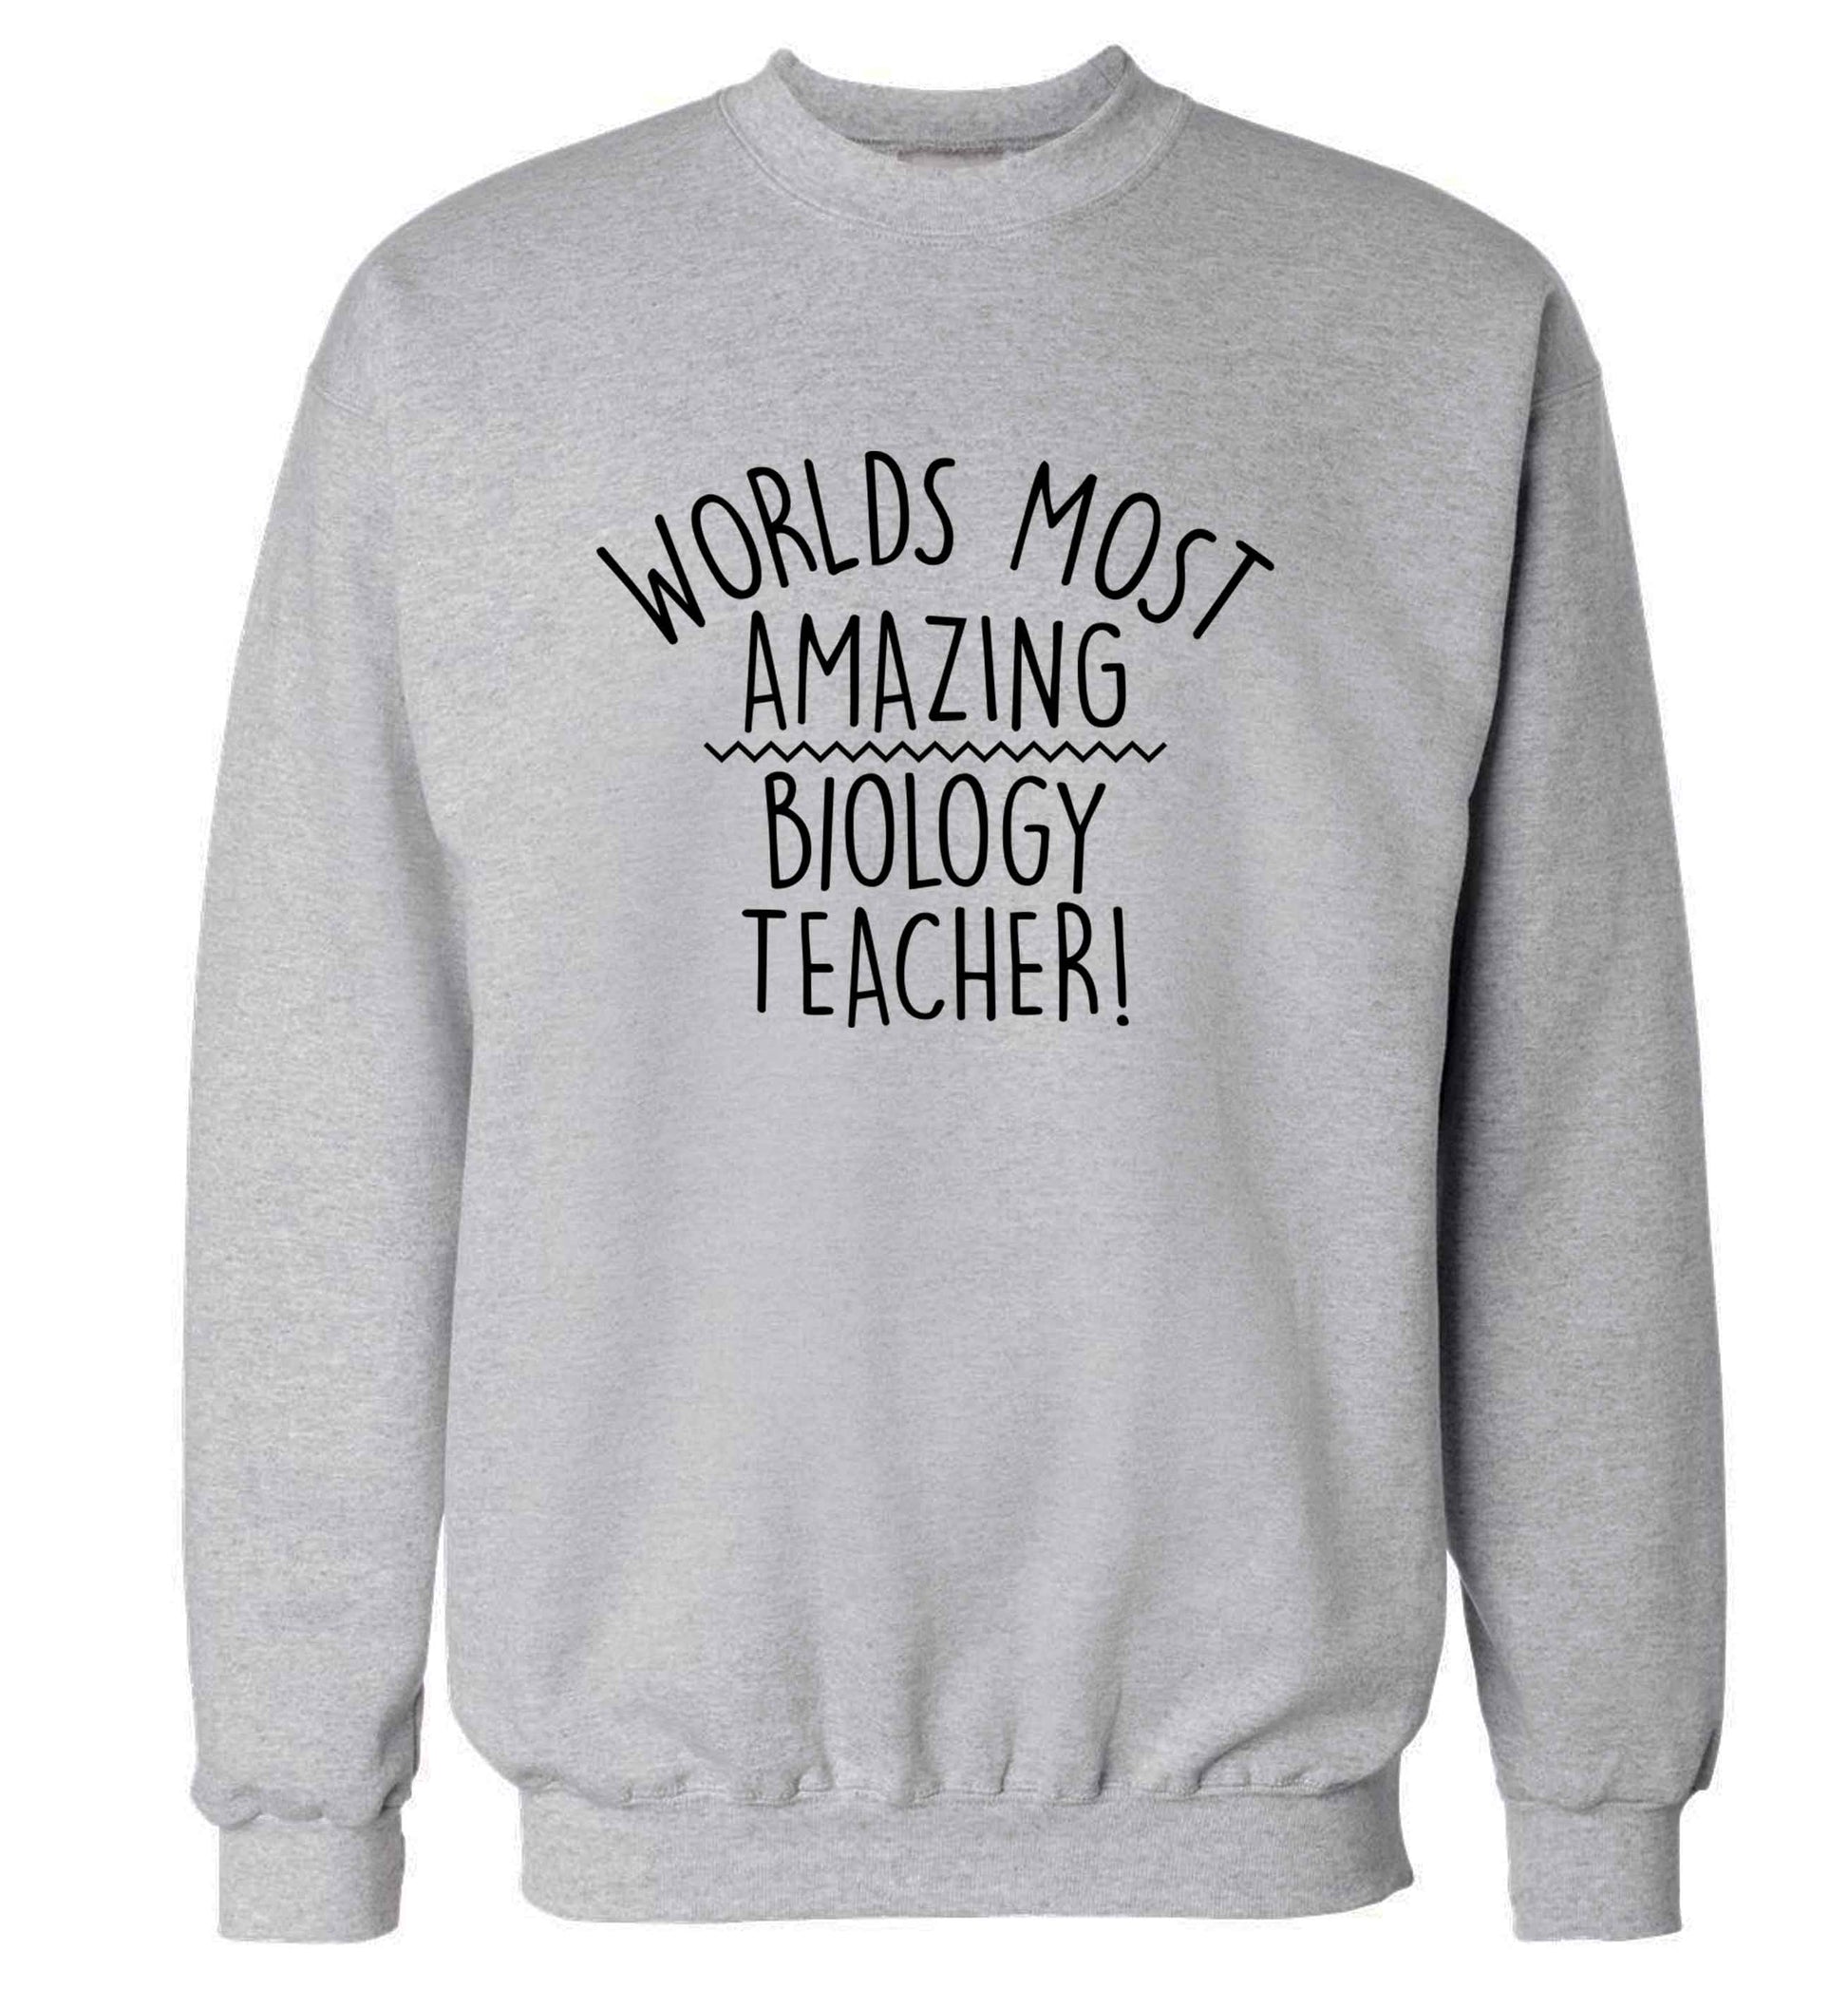 Worlds most amazing biology teacher adult's unisex grey sweater 2XL